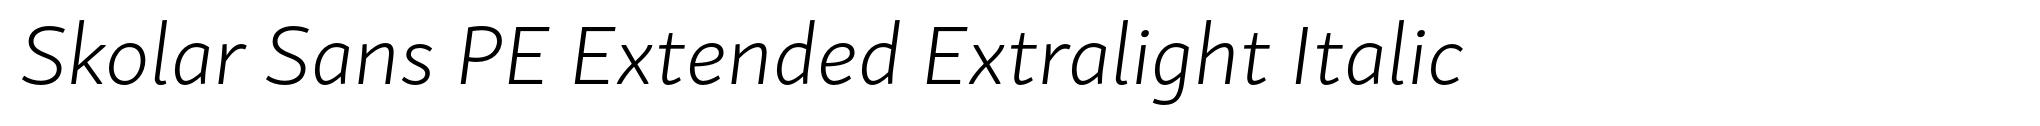 Skolar Sans PE Extended Extralight Italic image